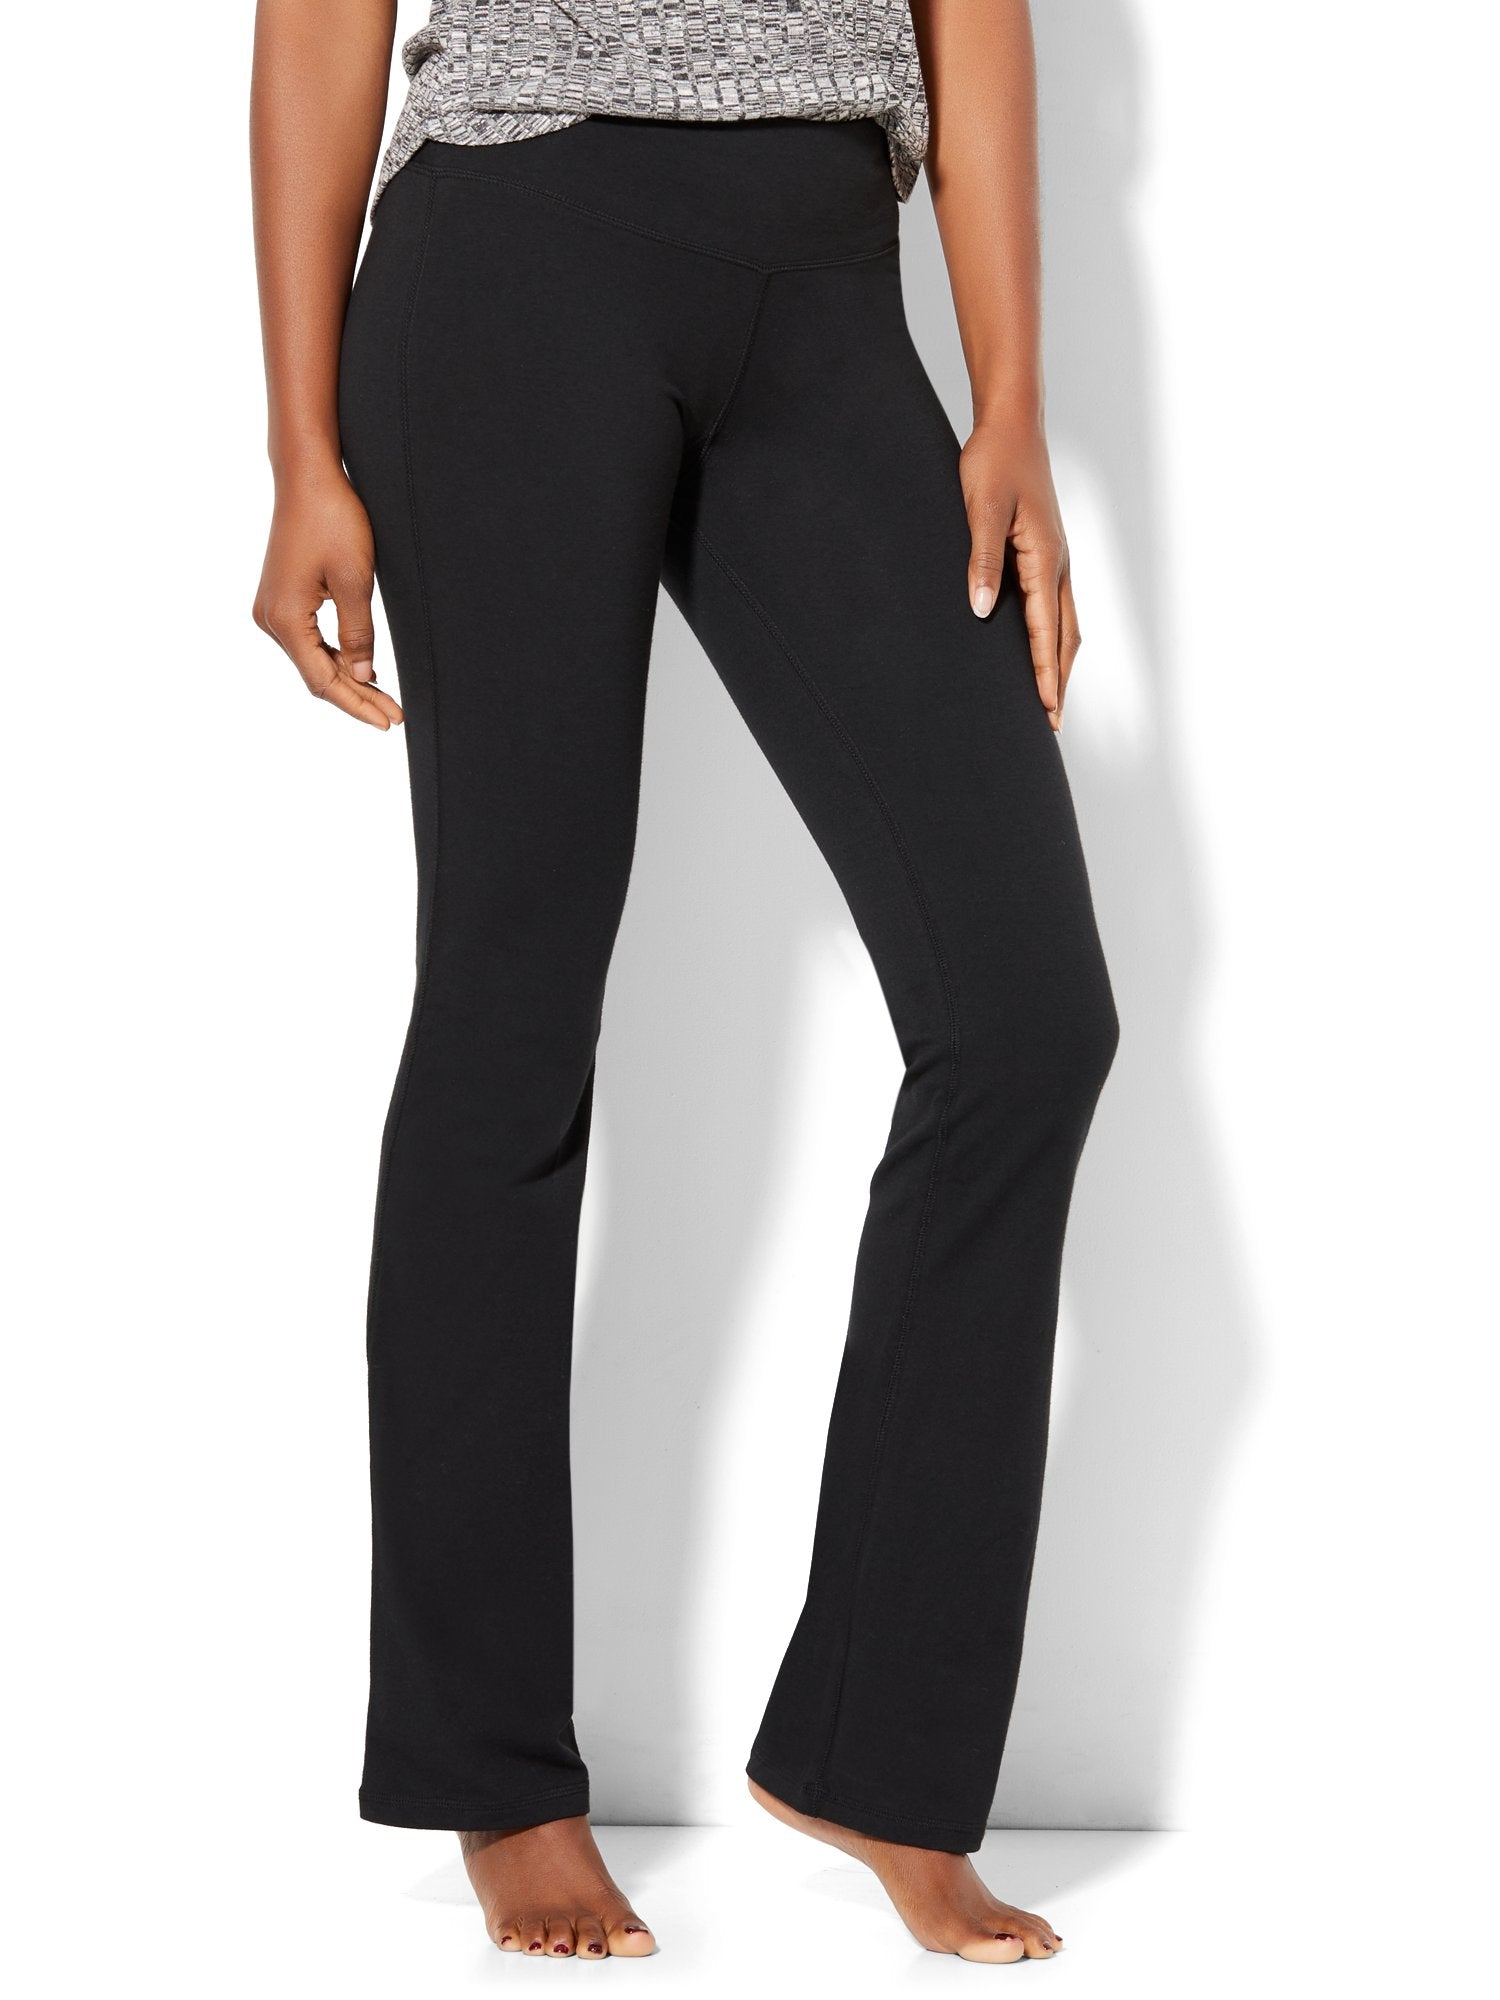 WILLIT Women's Size XS Petite Yoga Dress Pants/ Bootcut/ Stretch